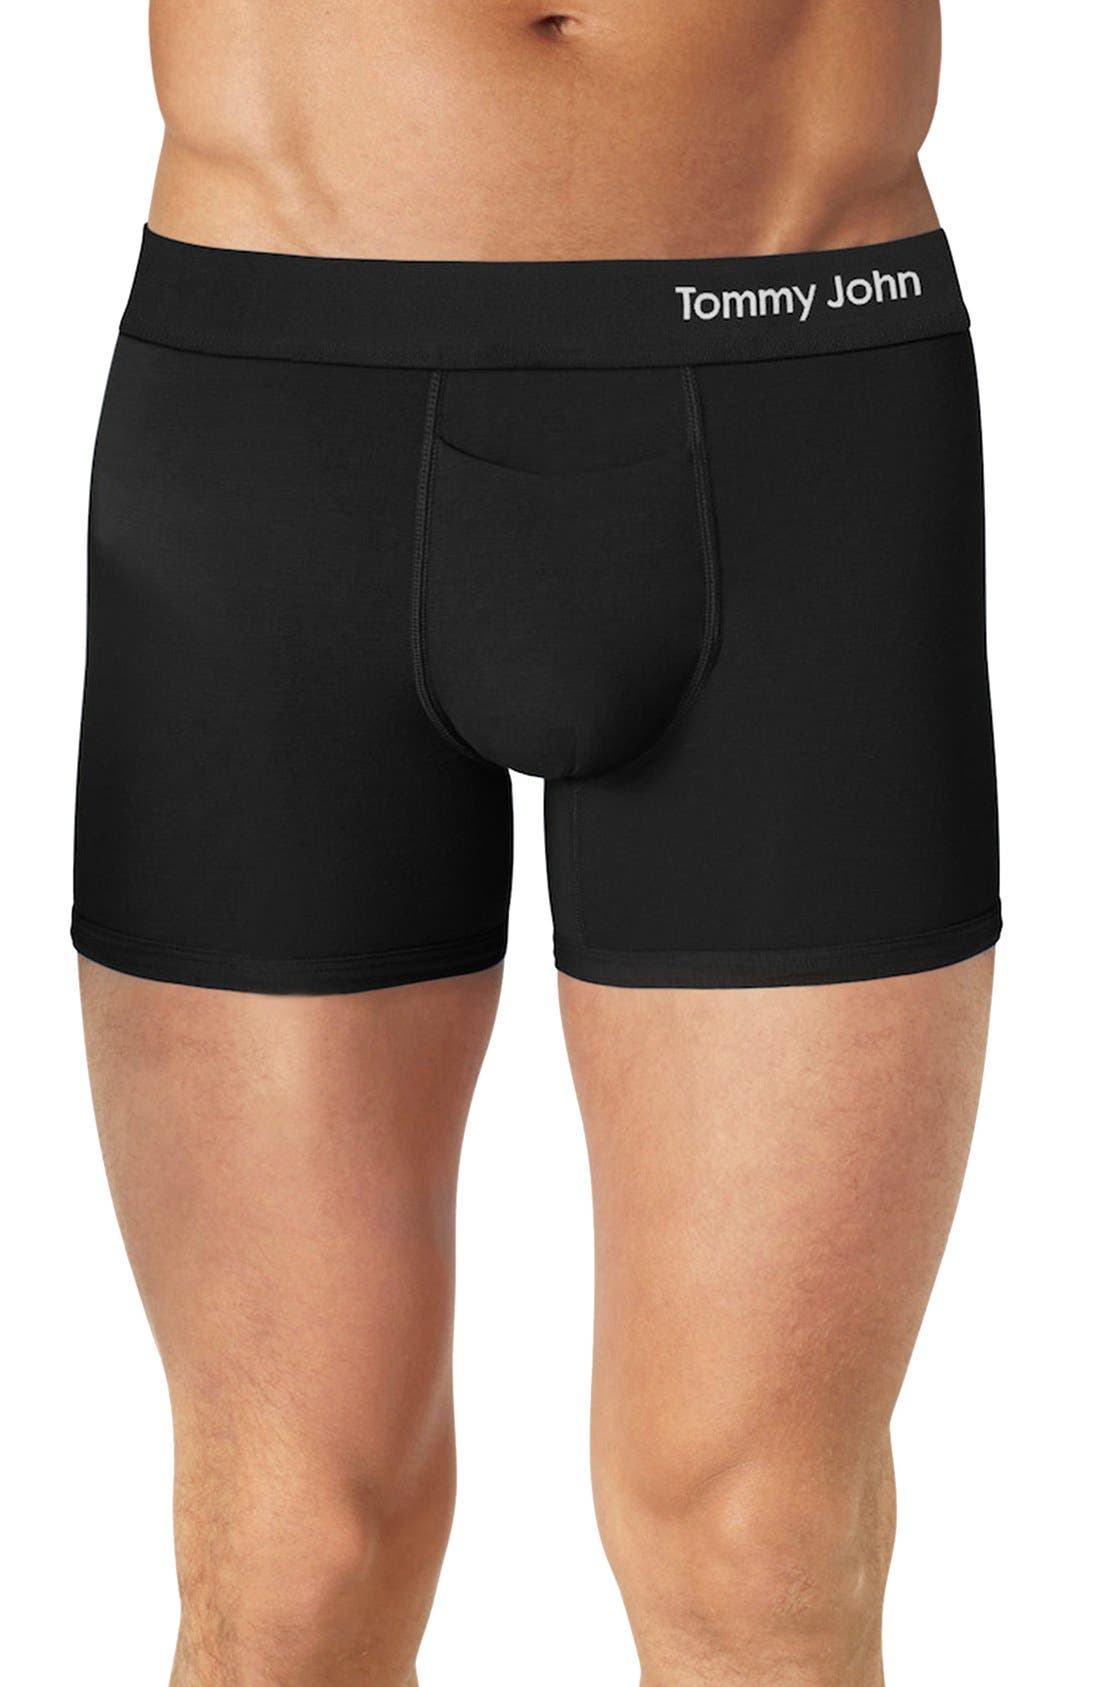 tommy john underwear black friday